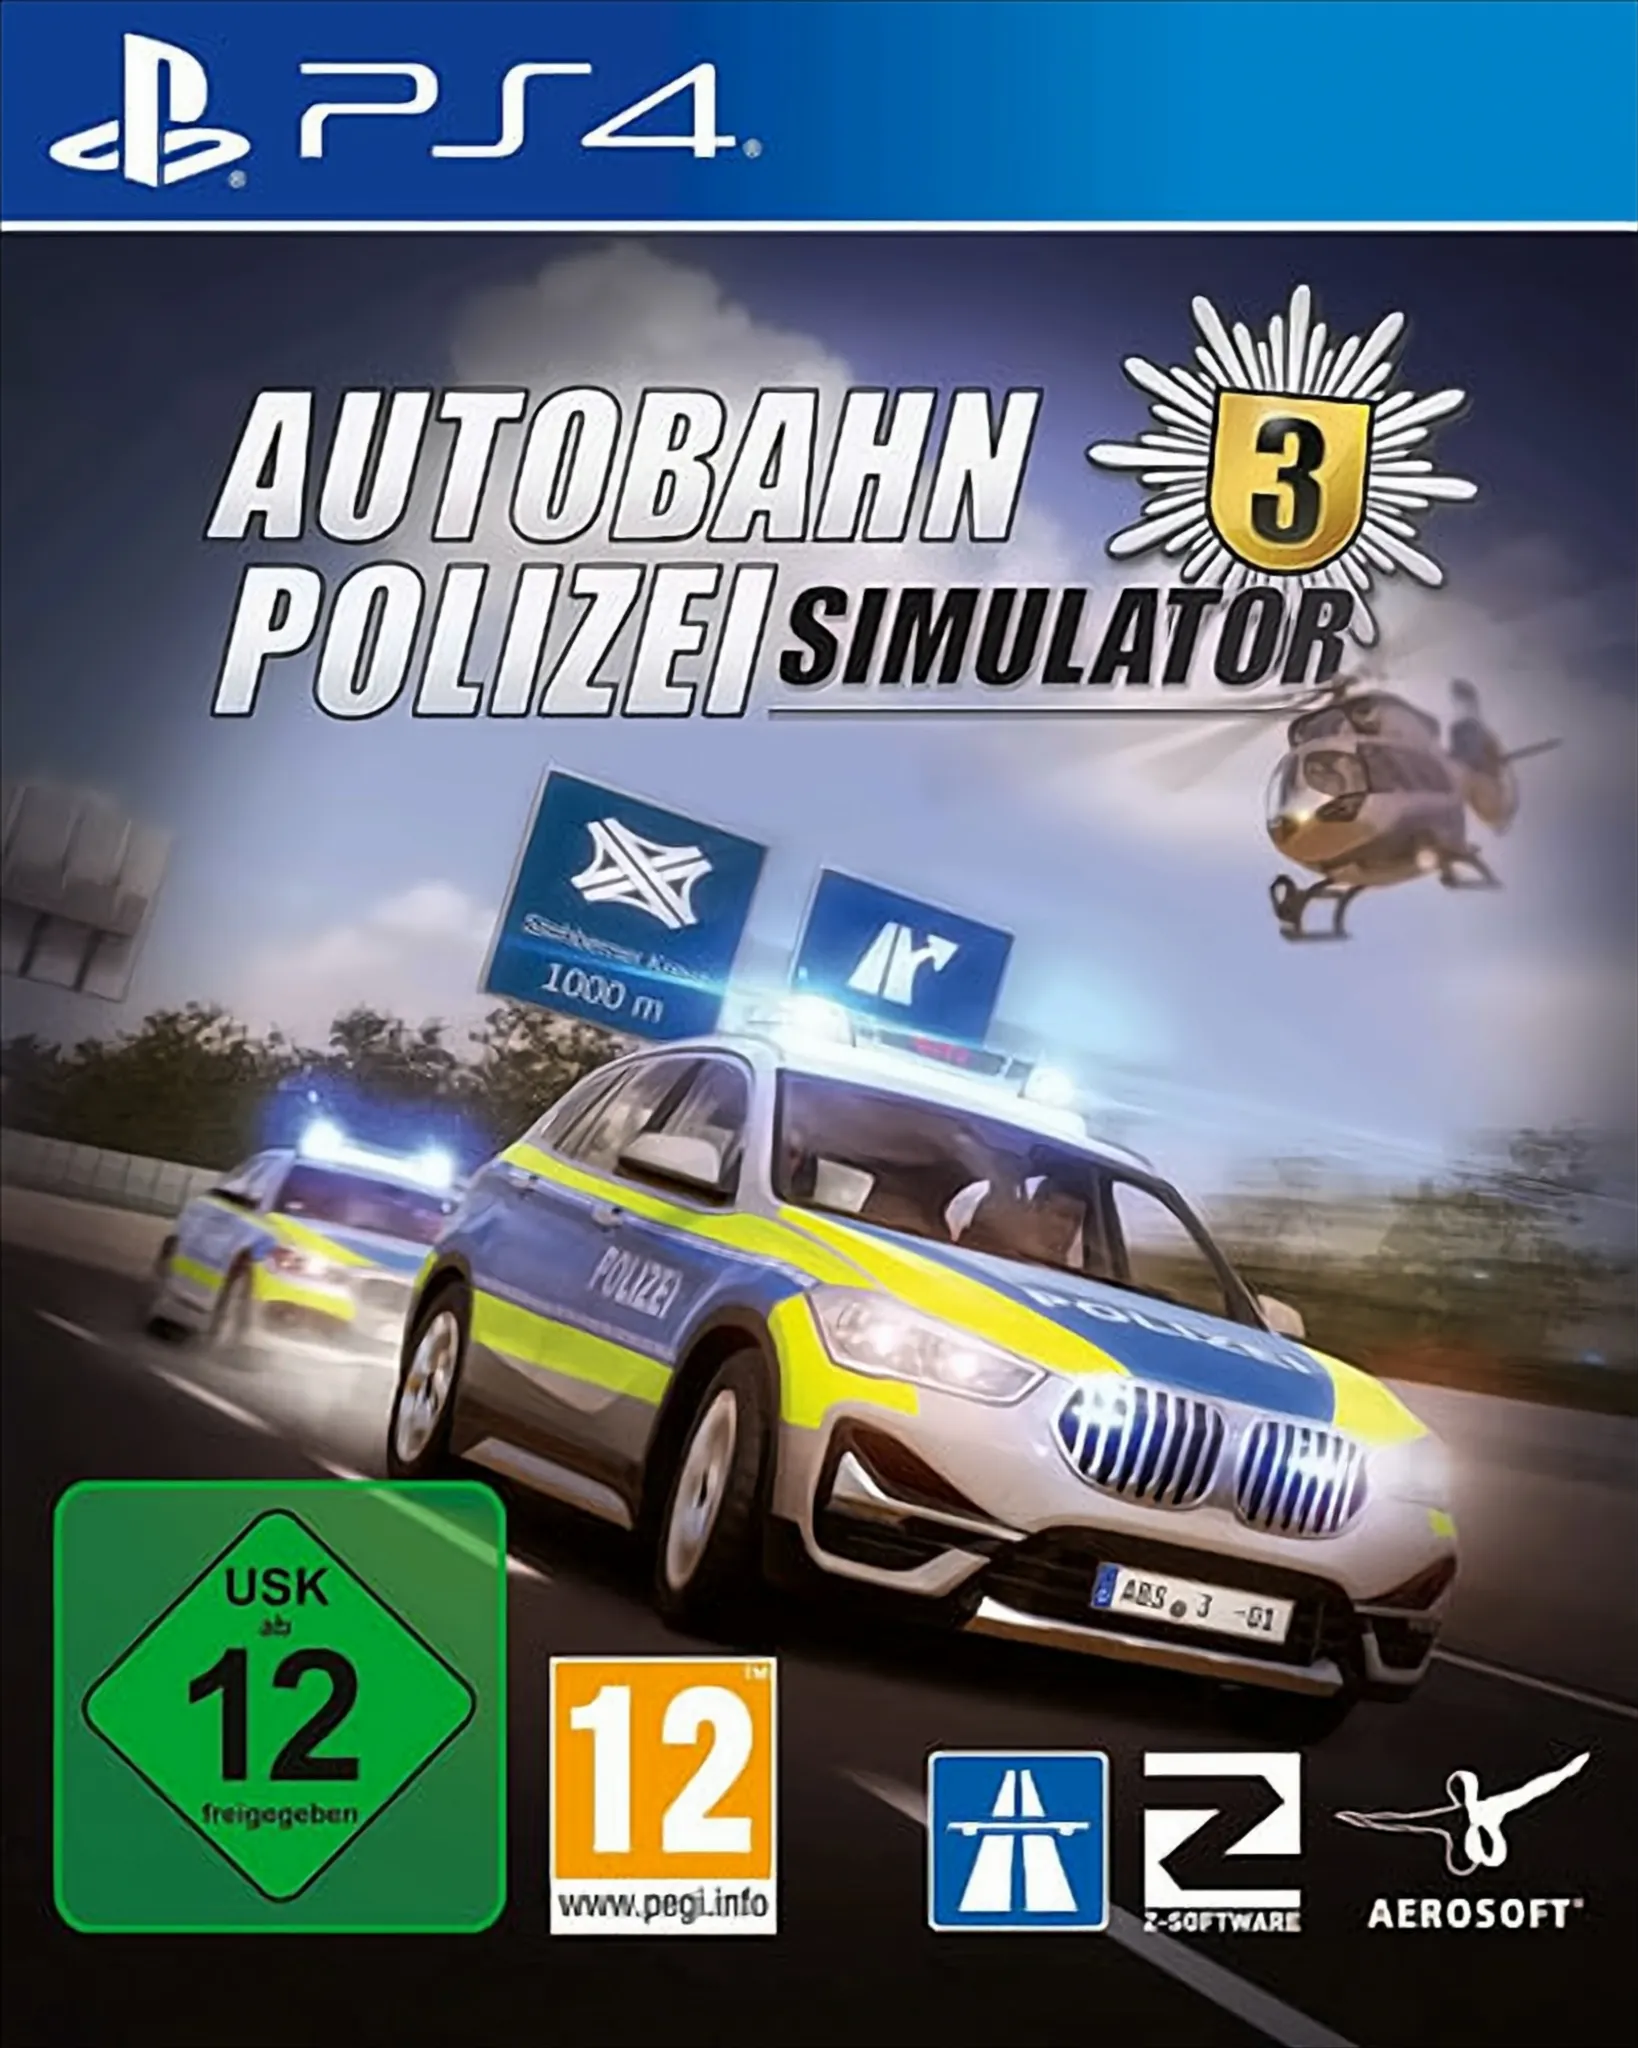 Autobahn-Polizei PS4 Simulator Konsole - 3